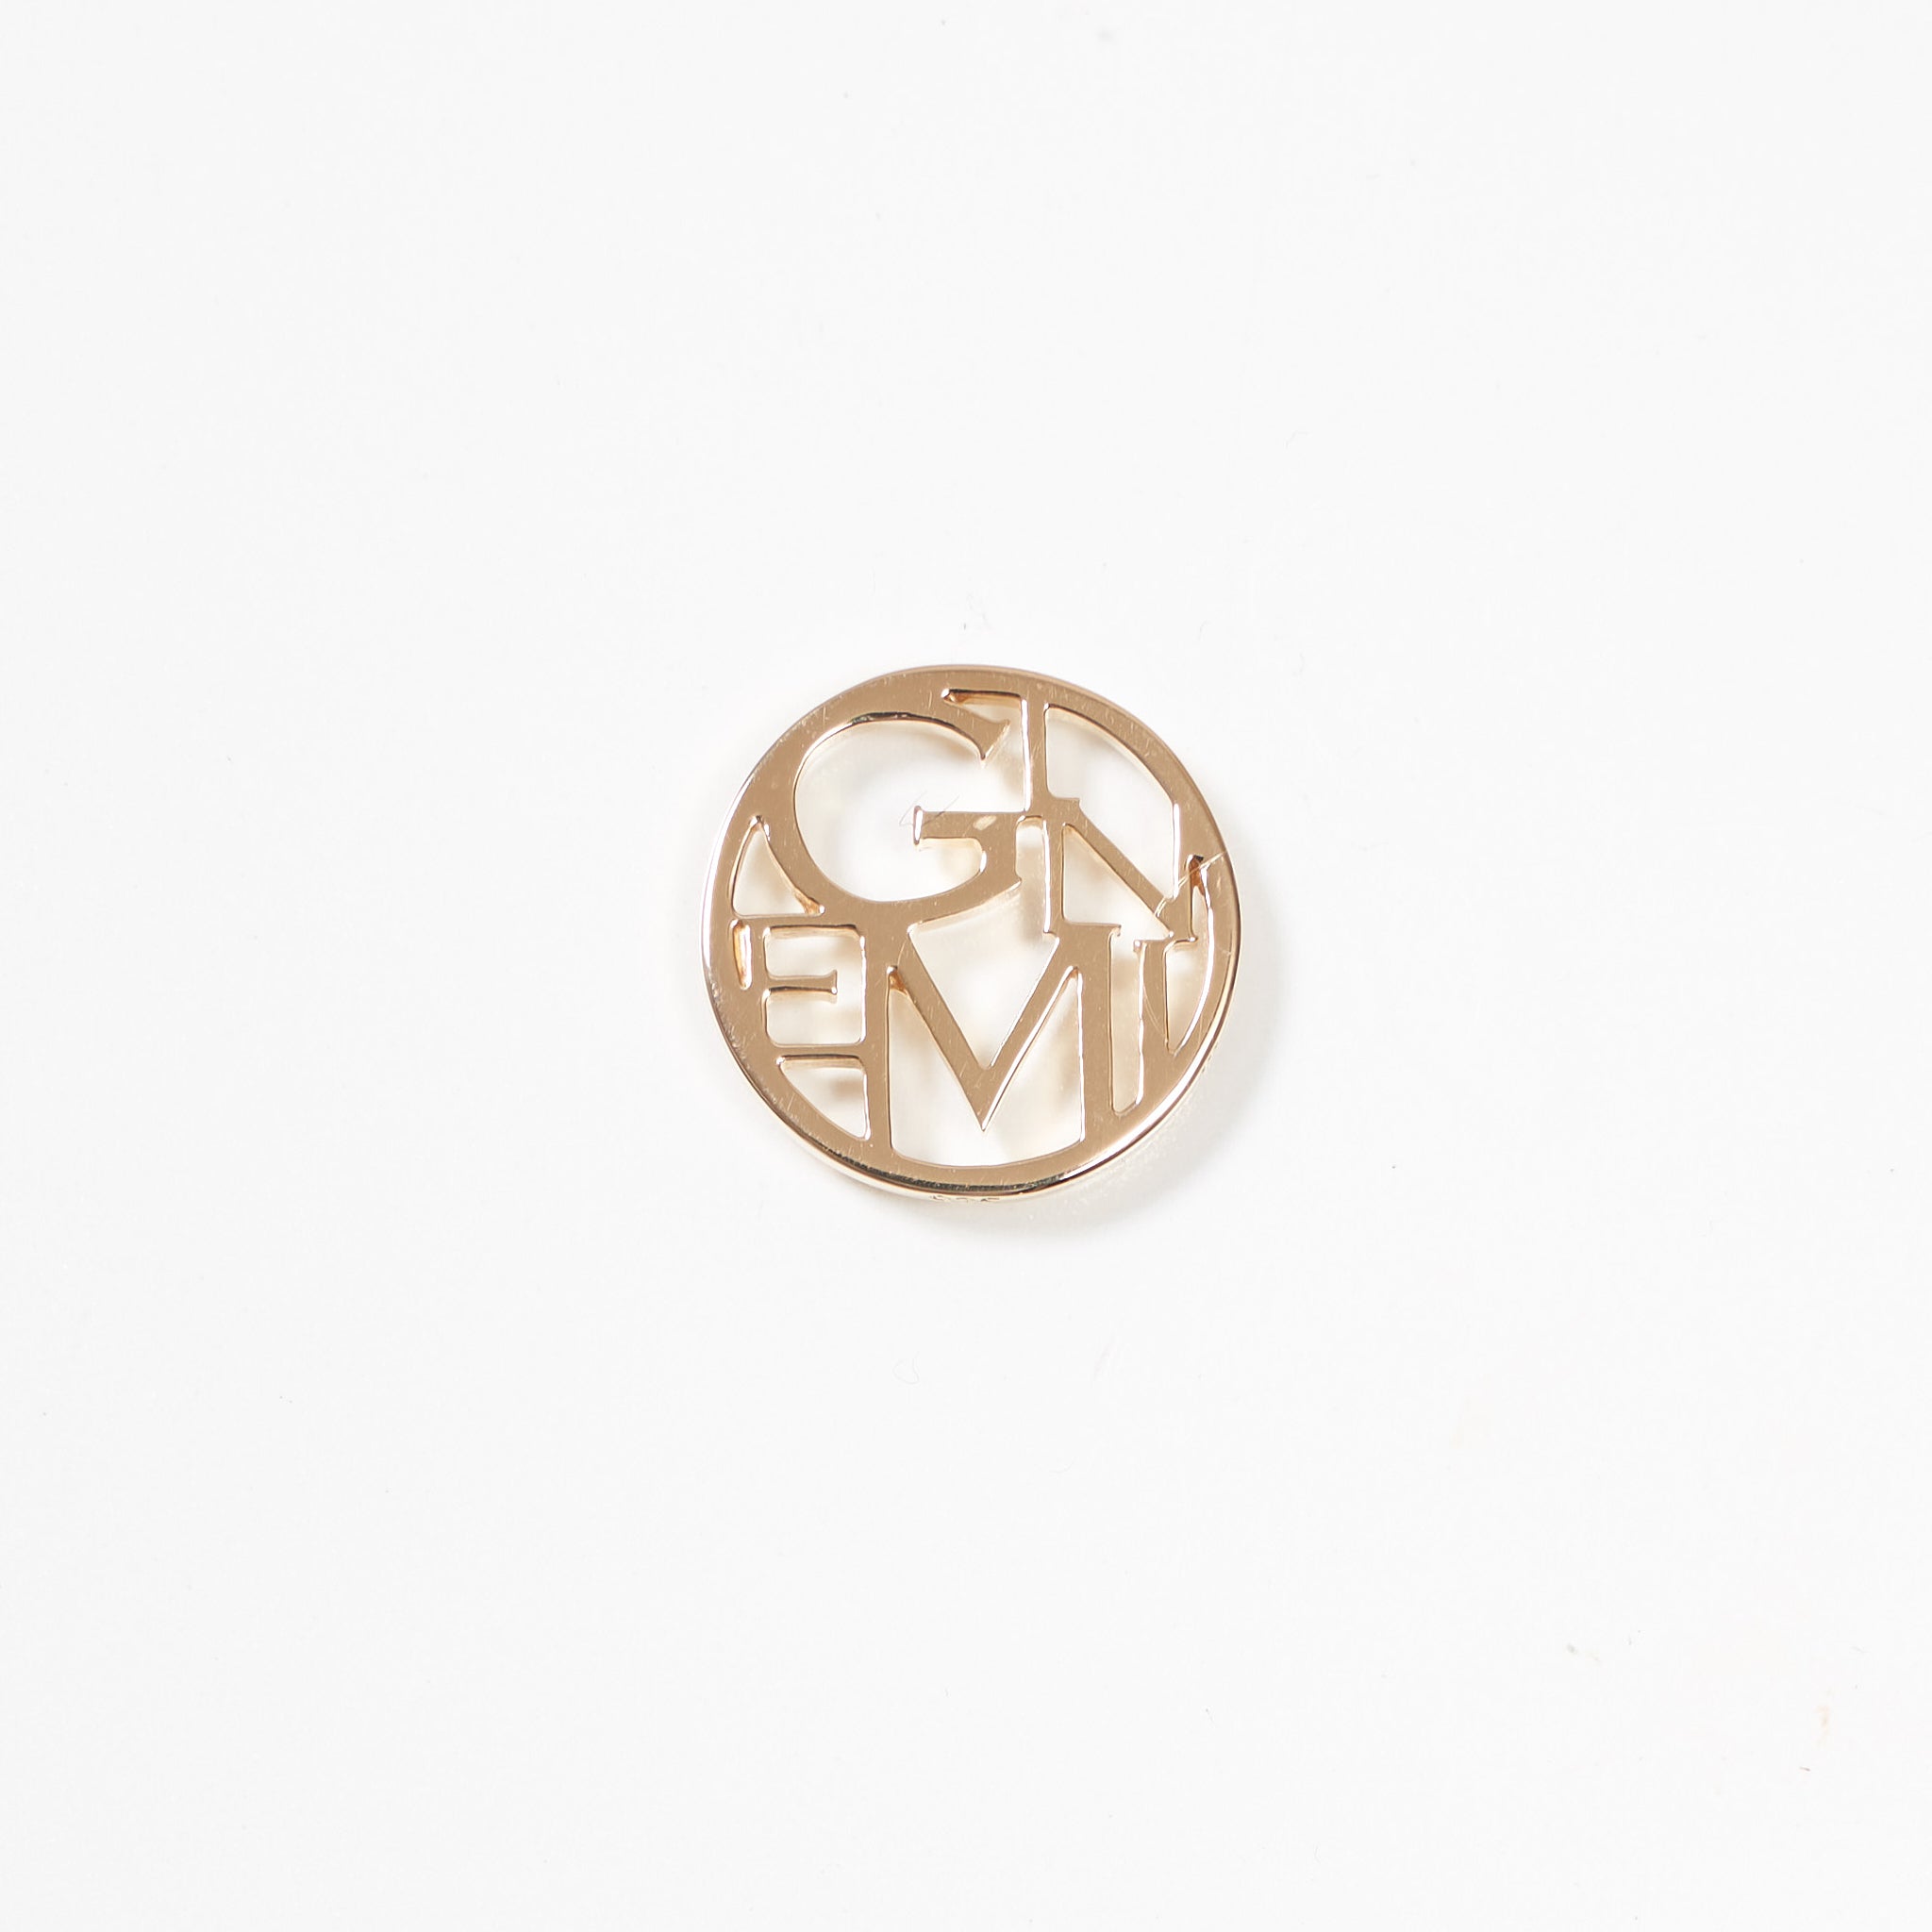 Zodiac Circle Necklace 48cm -Gold-